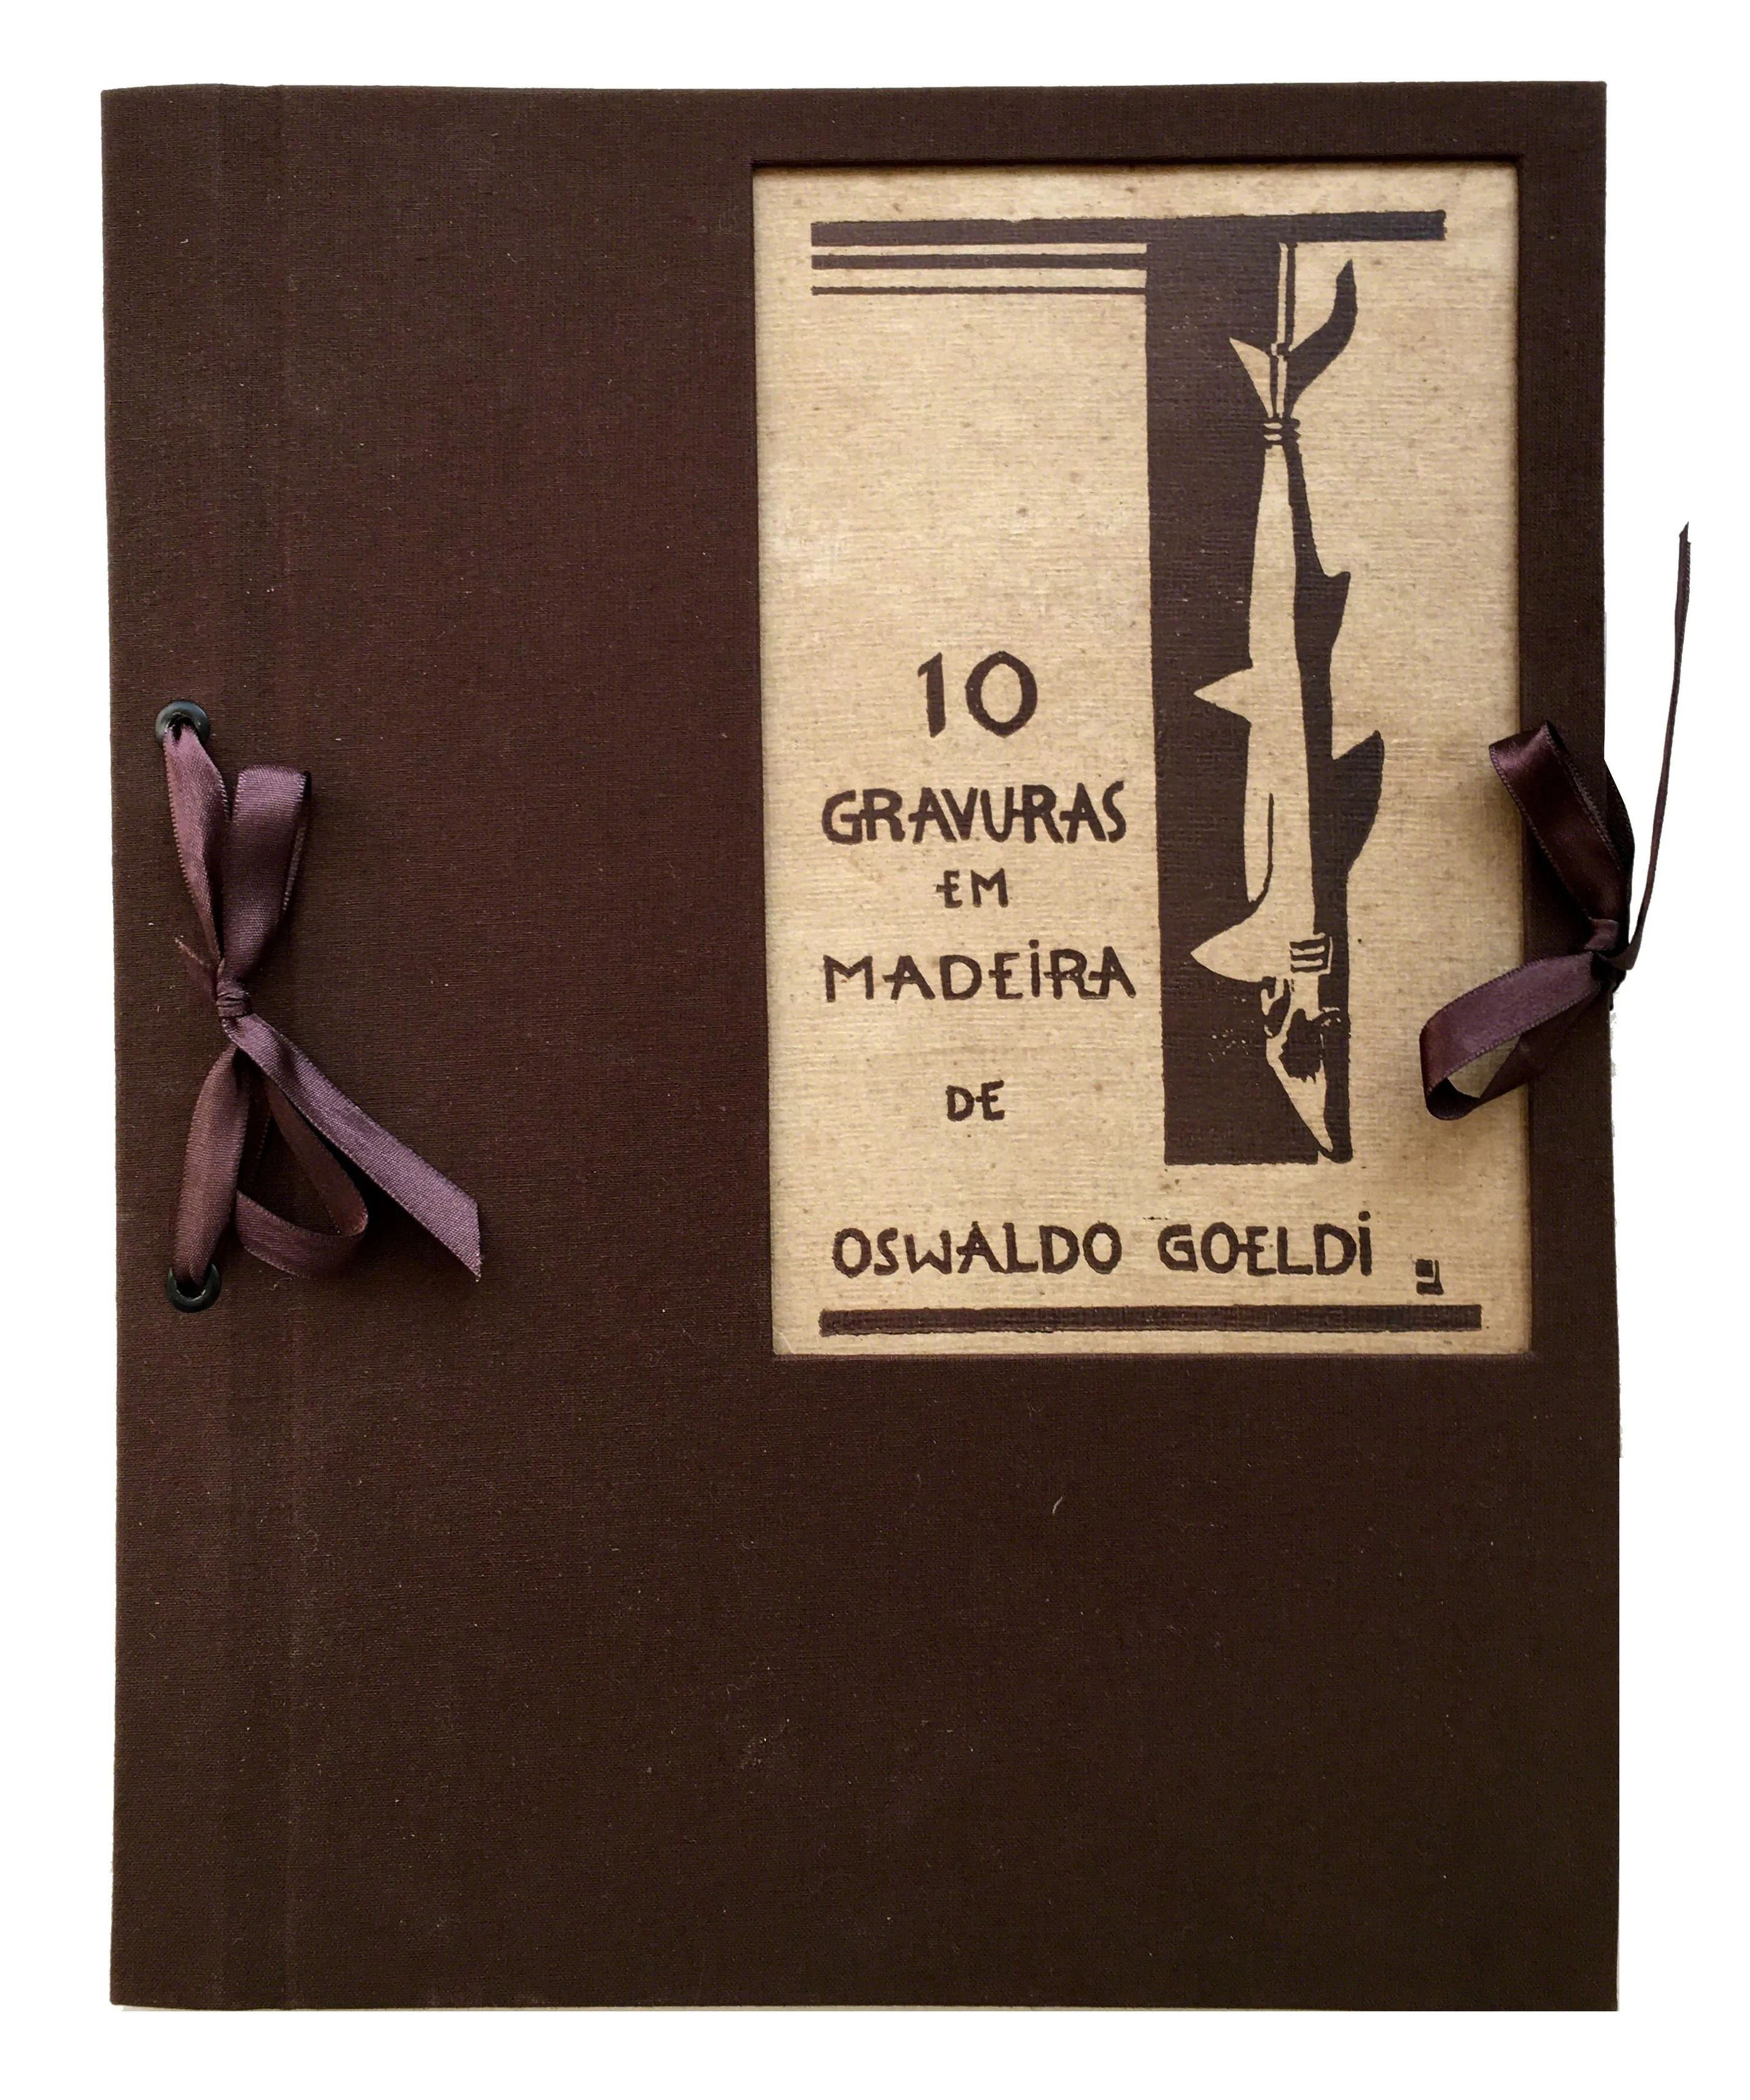 10 Gravuras Em Madeira de Oswaldo Goeldi by Oswaldo Goeldi for sale